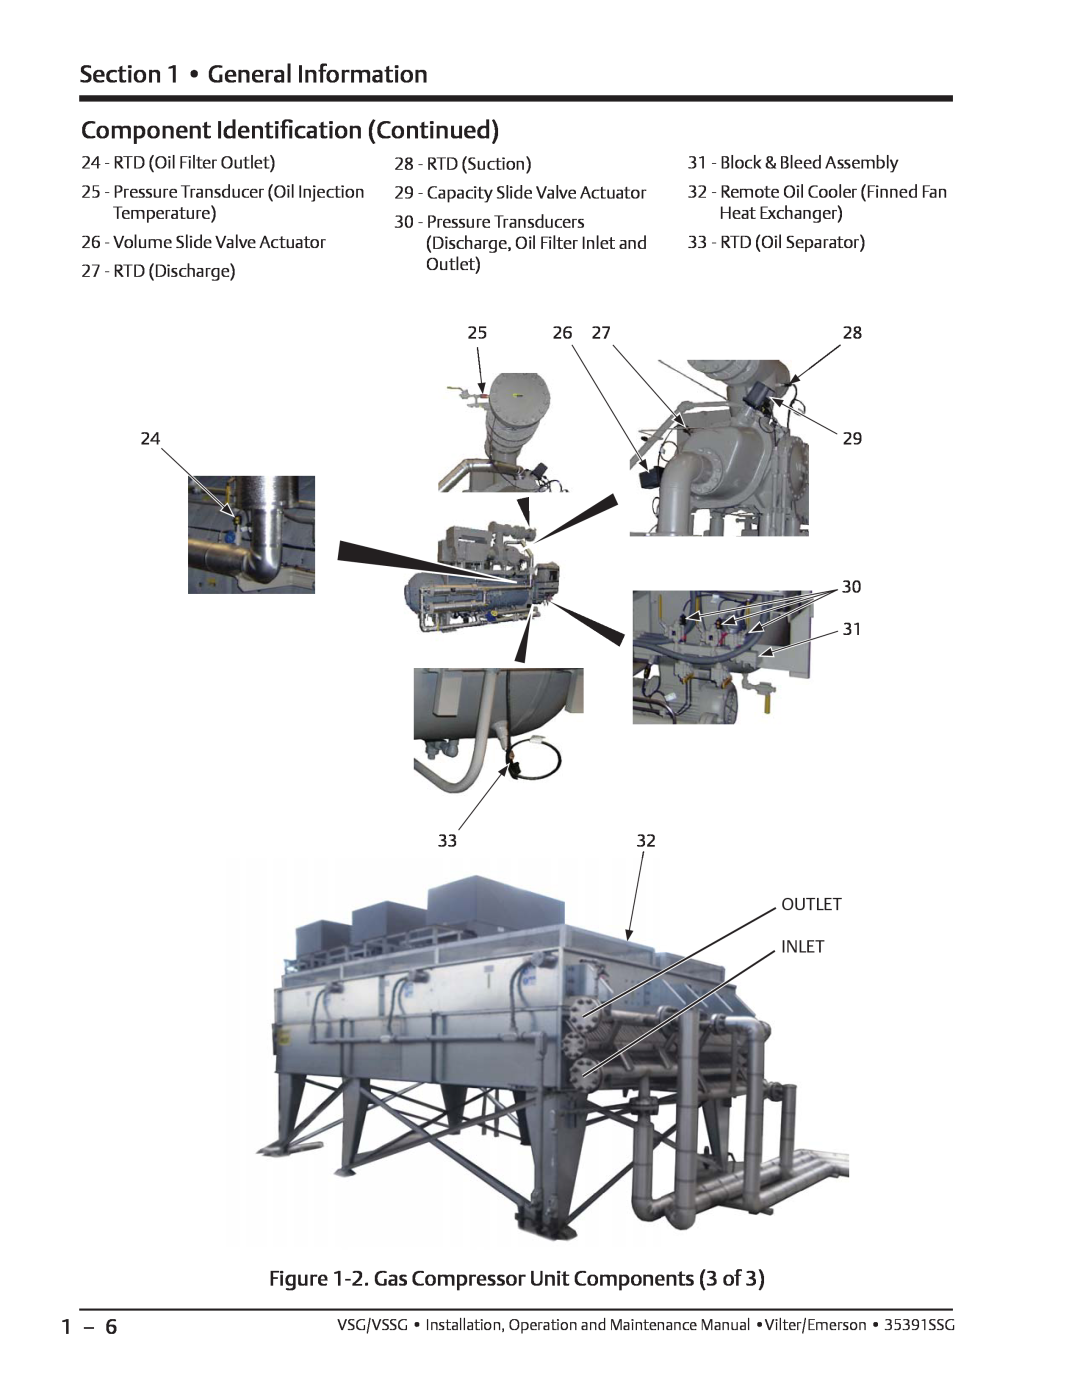 Emerson VSSG, VSG manual General Information Component Identiﬁcation Continued, 2. Gas Compressor Unit Components 3 of 